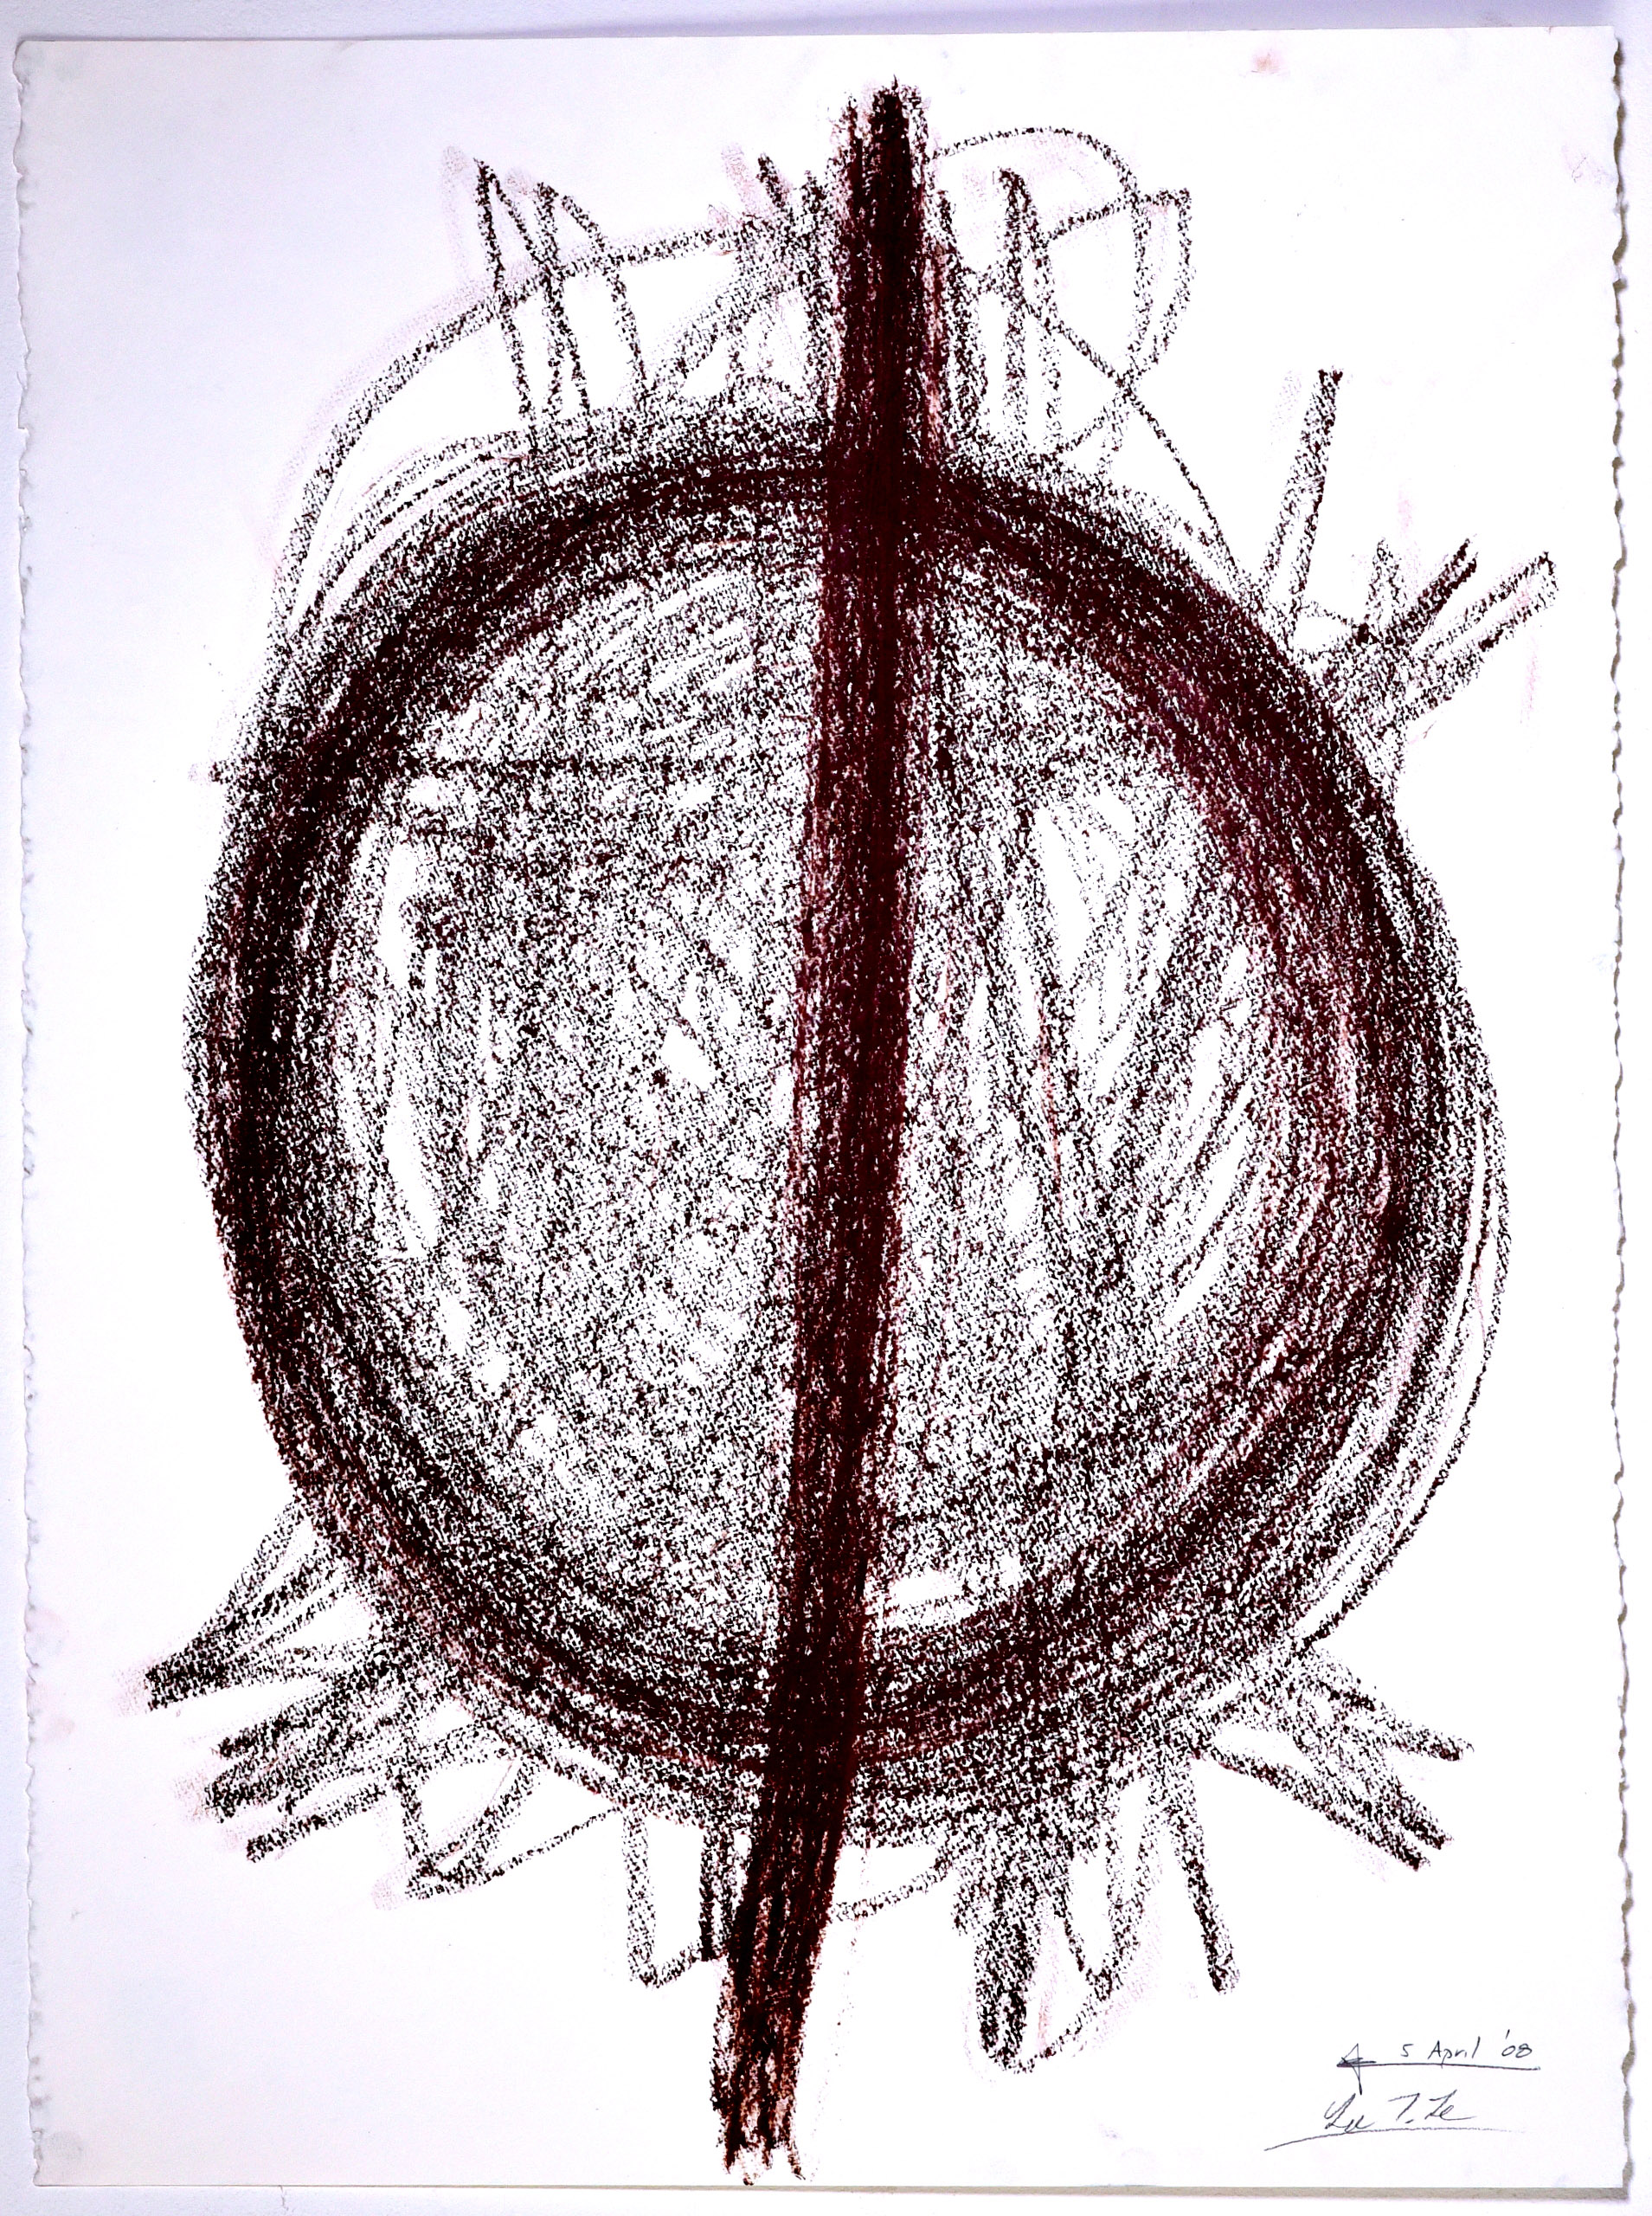 *Automatic Drawing #9,* 5 April 2008, conte crayon on paper, 30x22", Lee Tuyet Le & Glenn Zucman